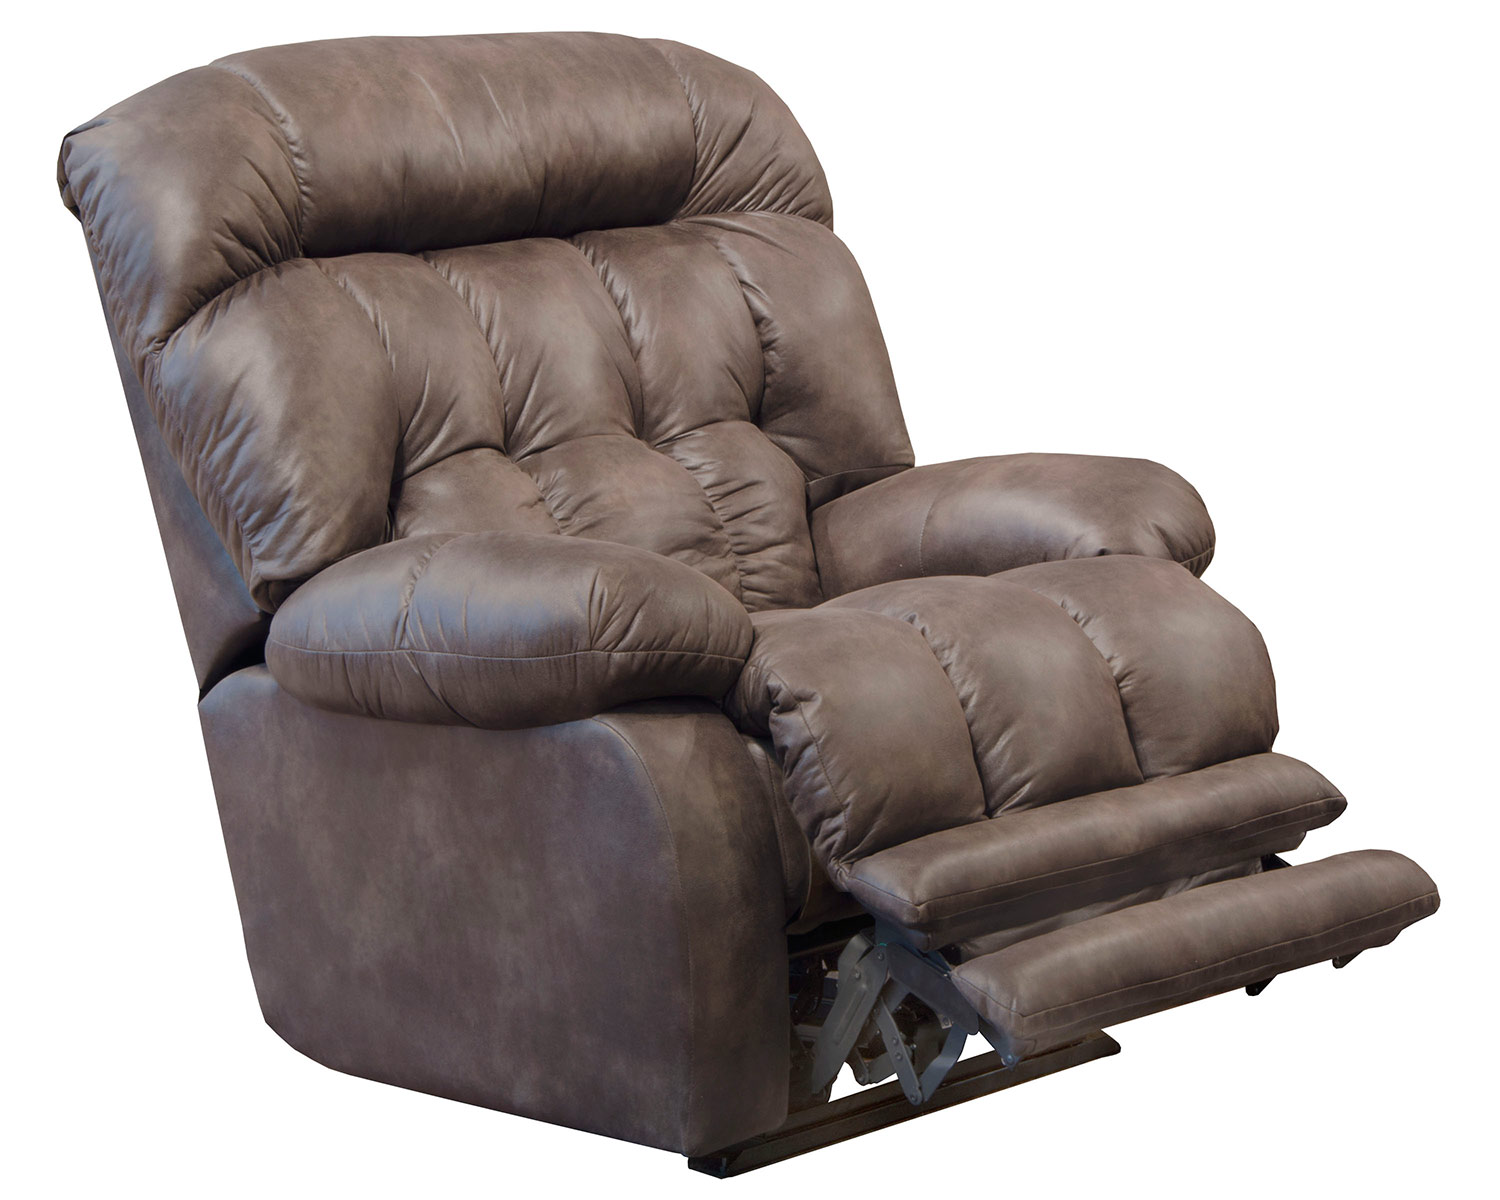 CatNapper Horton Recliner Chair - Dusk